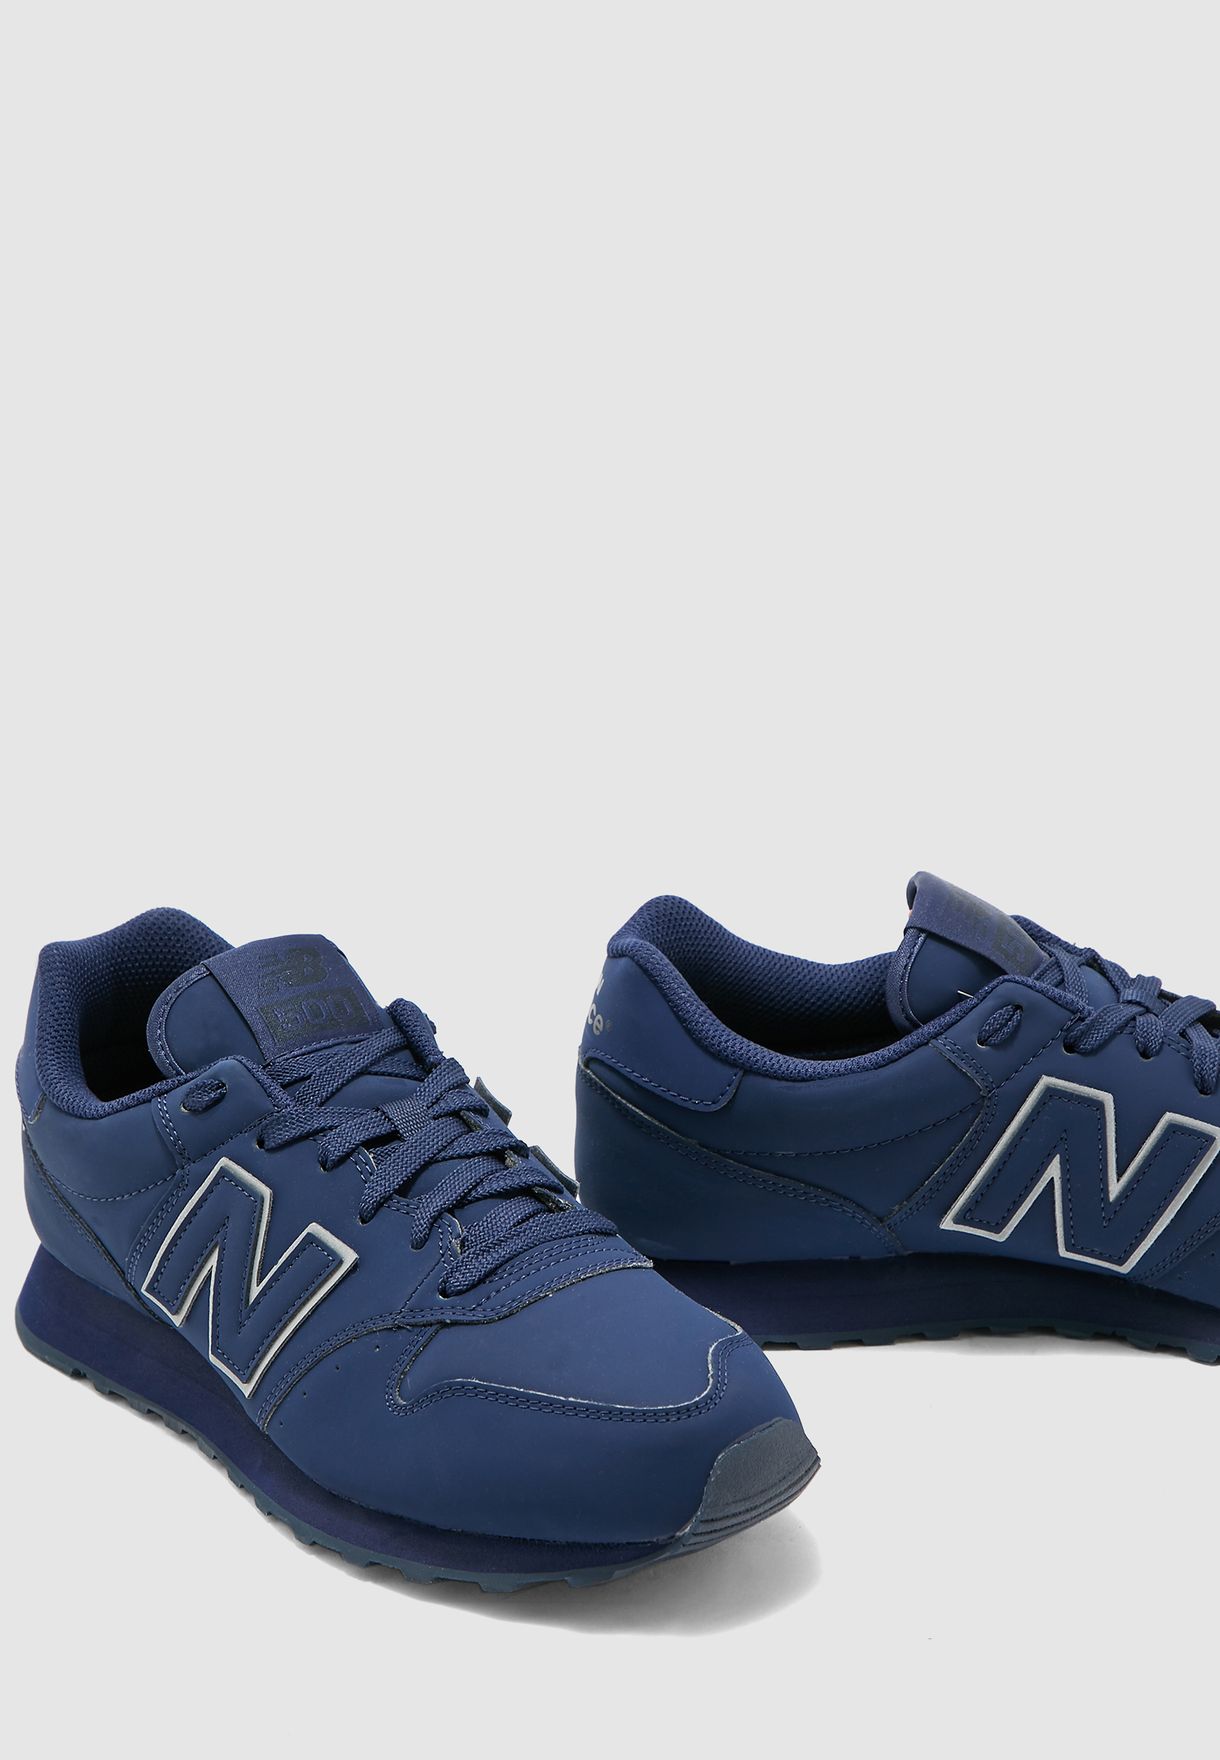 new balance 500 men navy Shop Clothing & Shoes Online